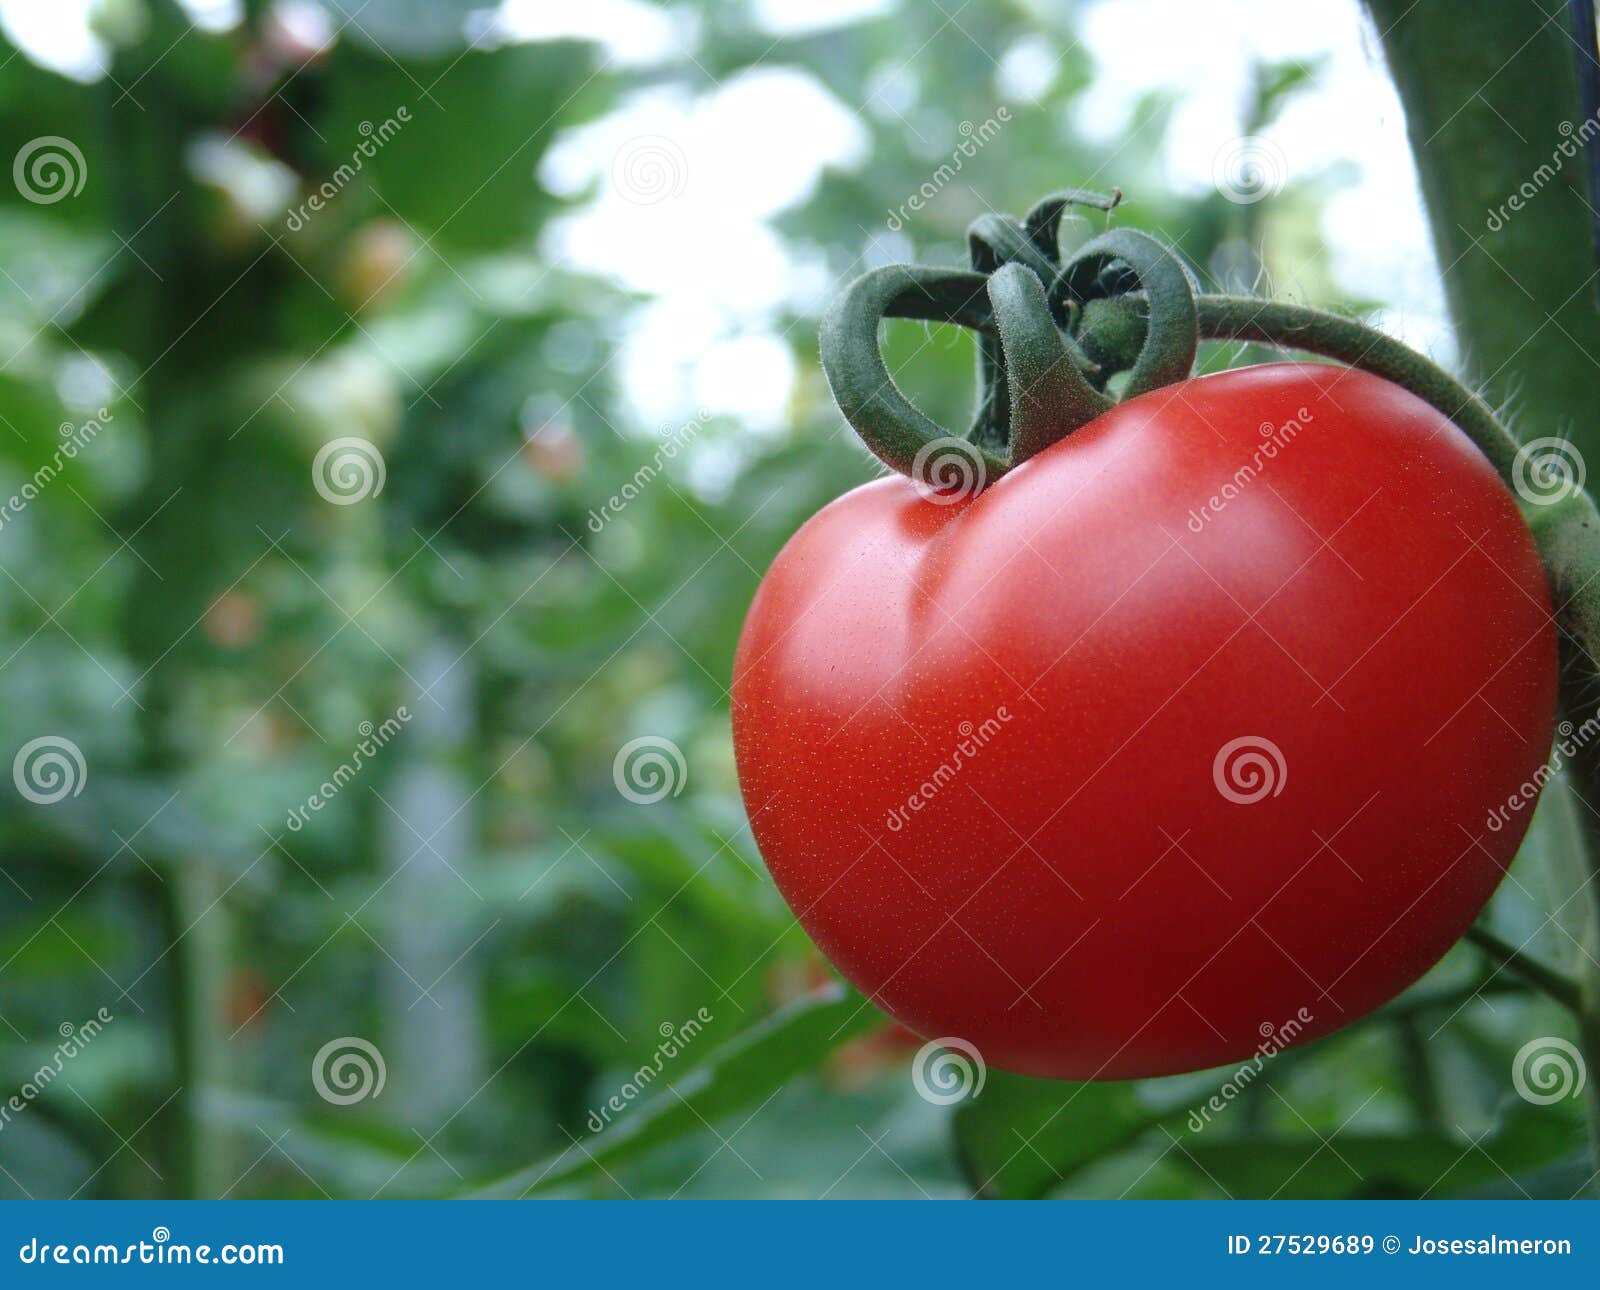 tomatoes on almeria greenhouse.